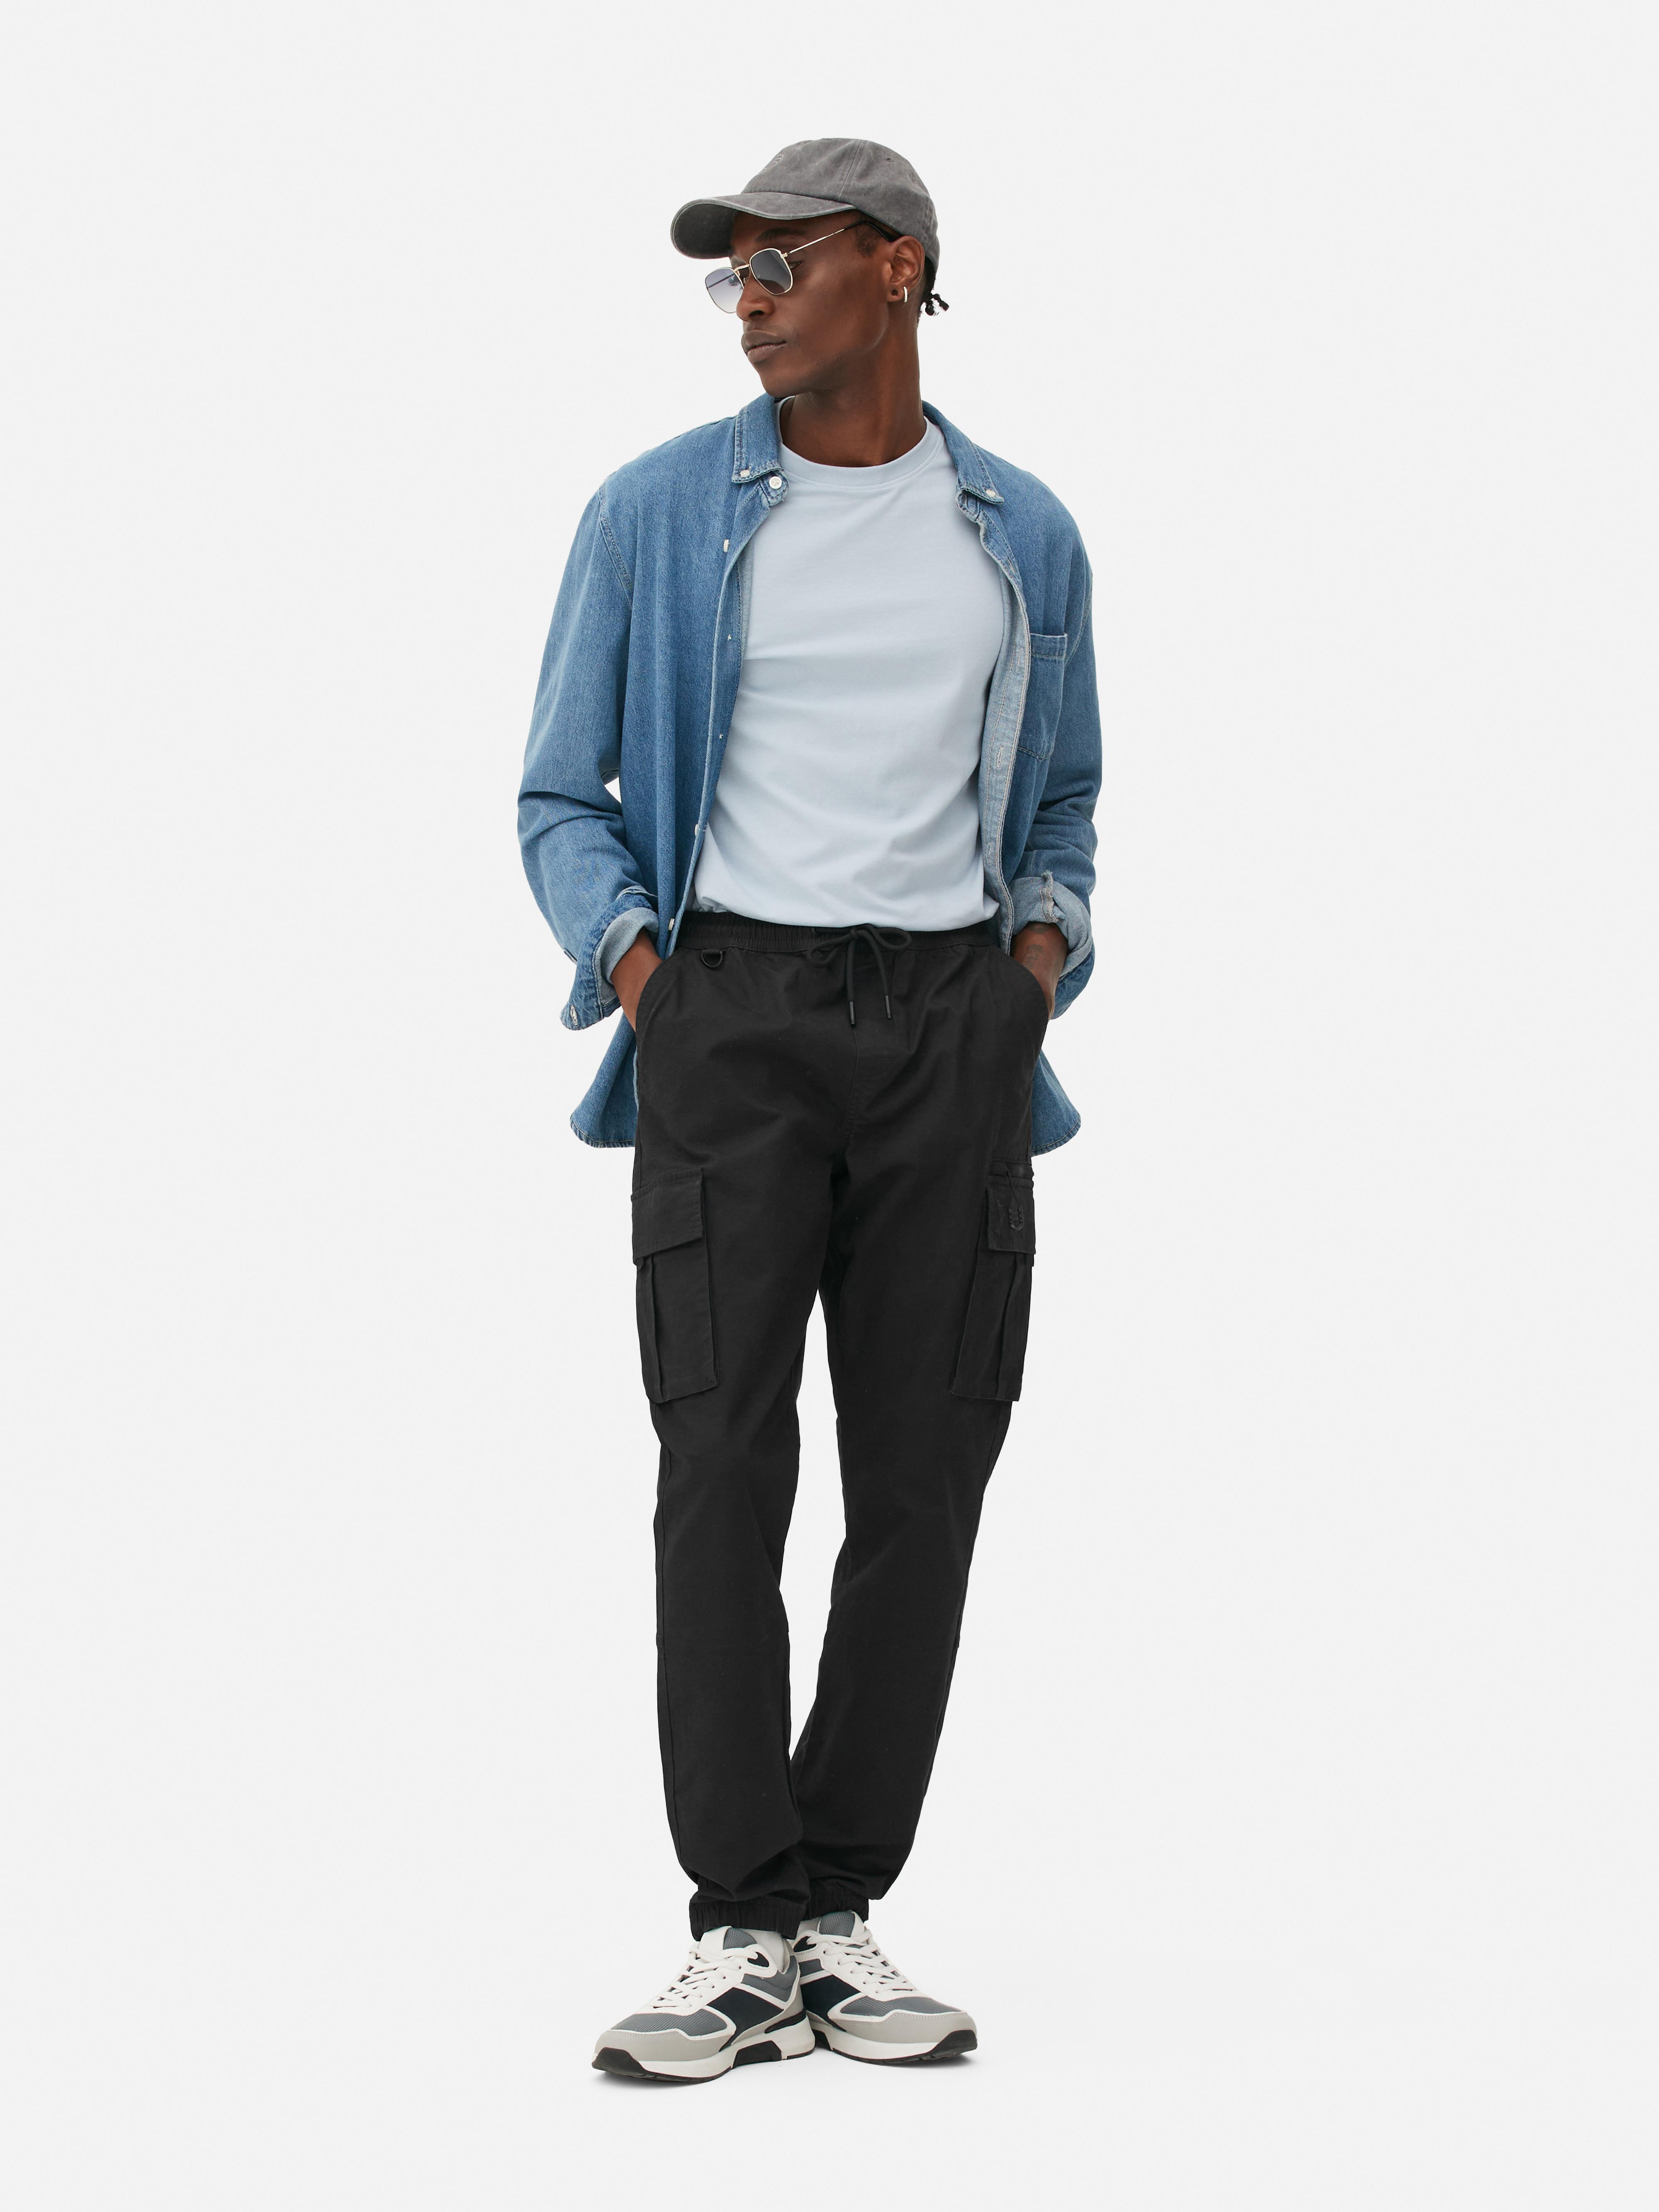 Men's Black Drawstring Cargo Pants | Primark